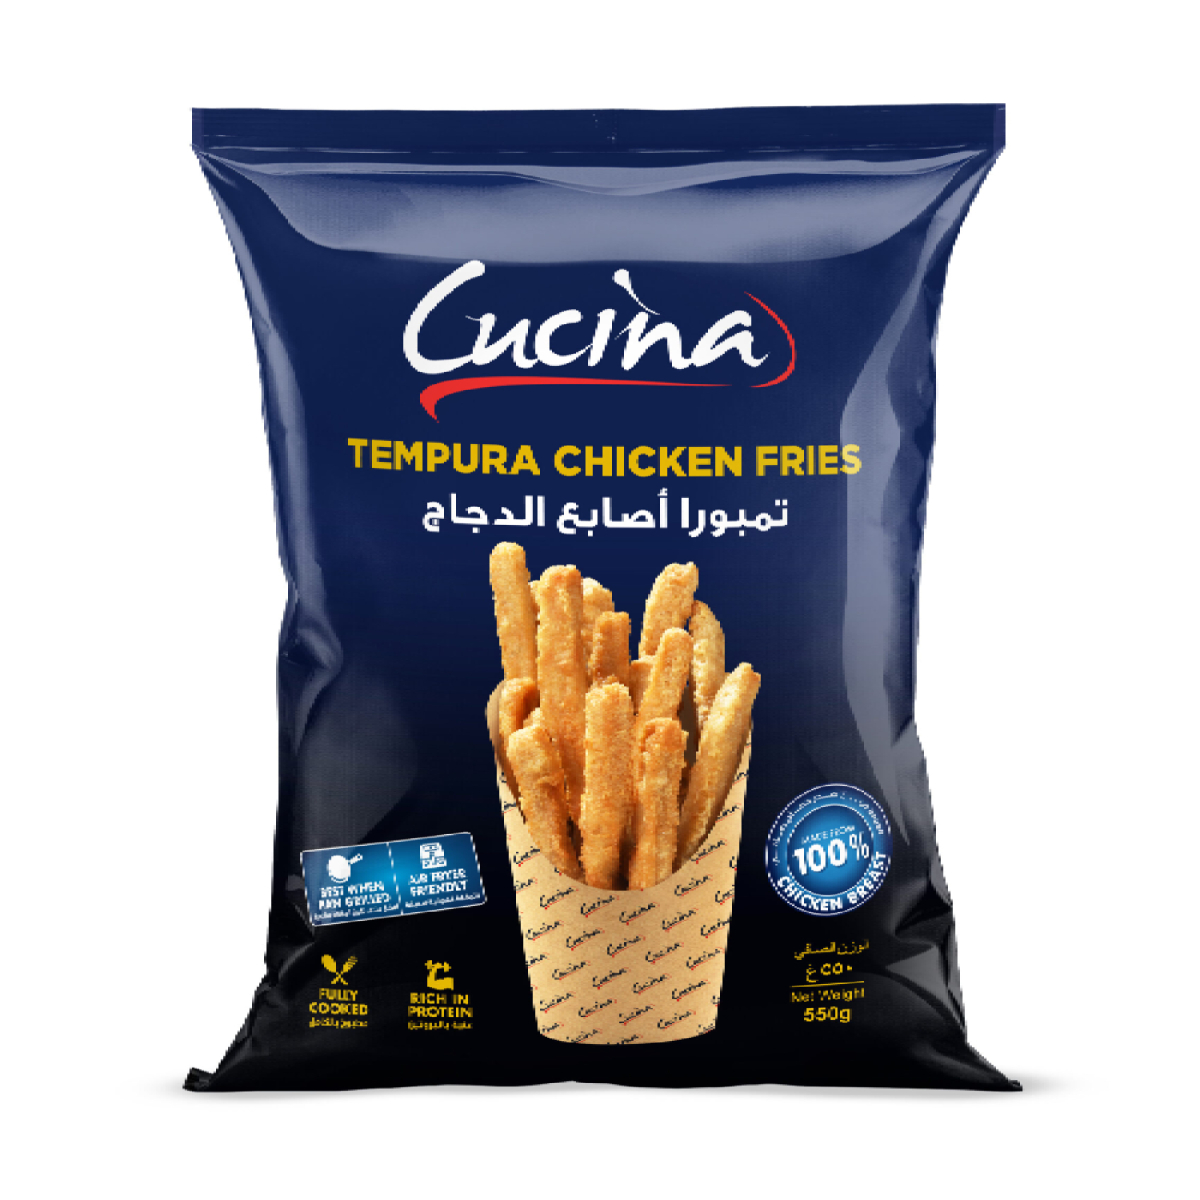 Cucina Tempura Chicken Fries 550 g